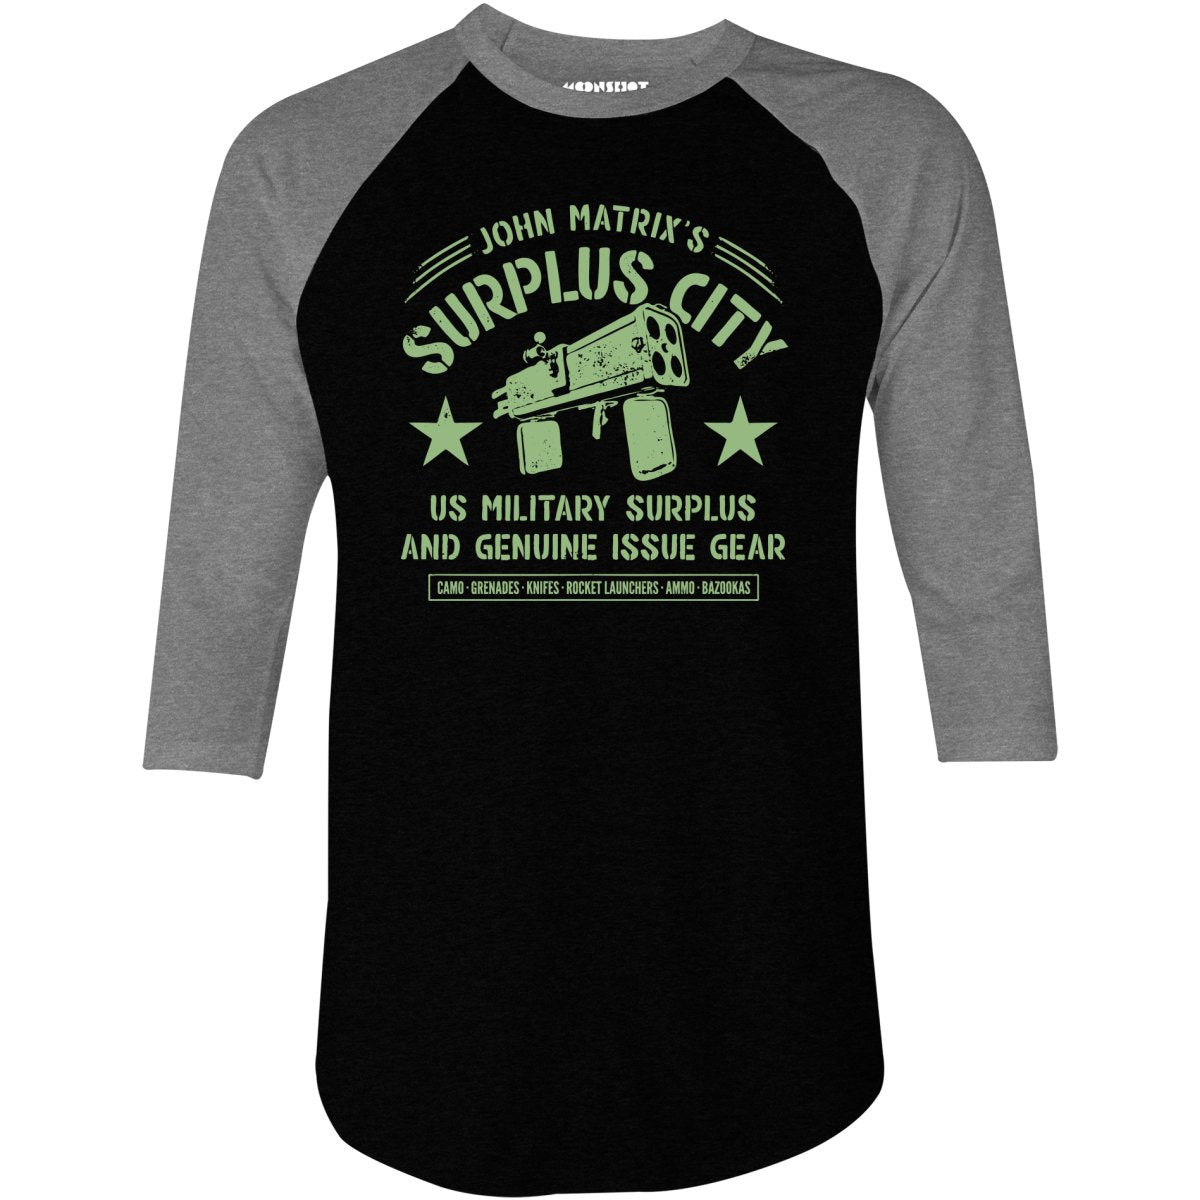 John Matrix's Surplus City - 3/4 Sleeve Raglan T-Shirt